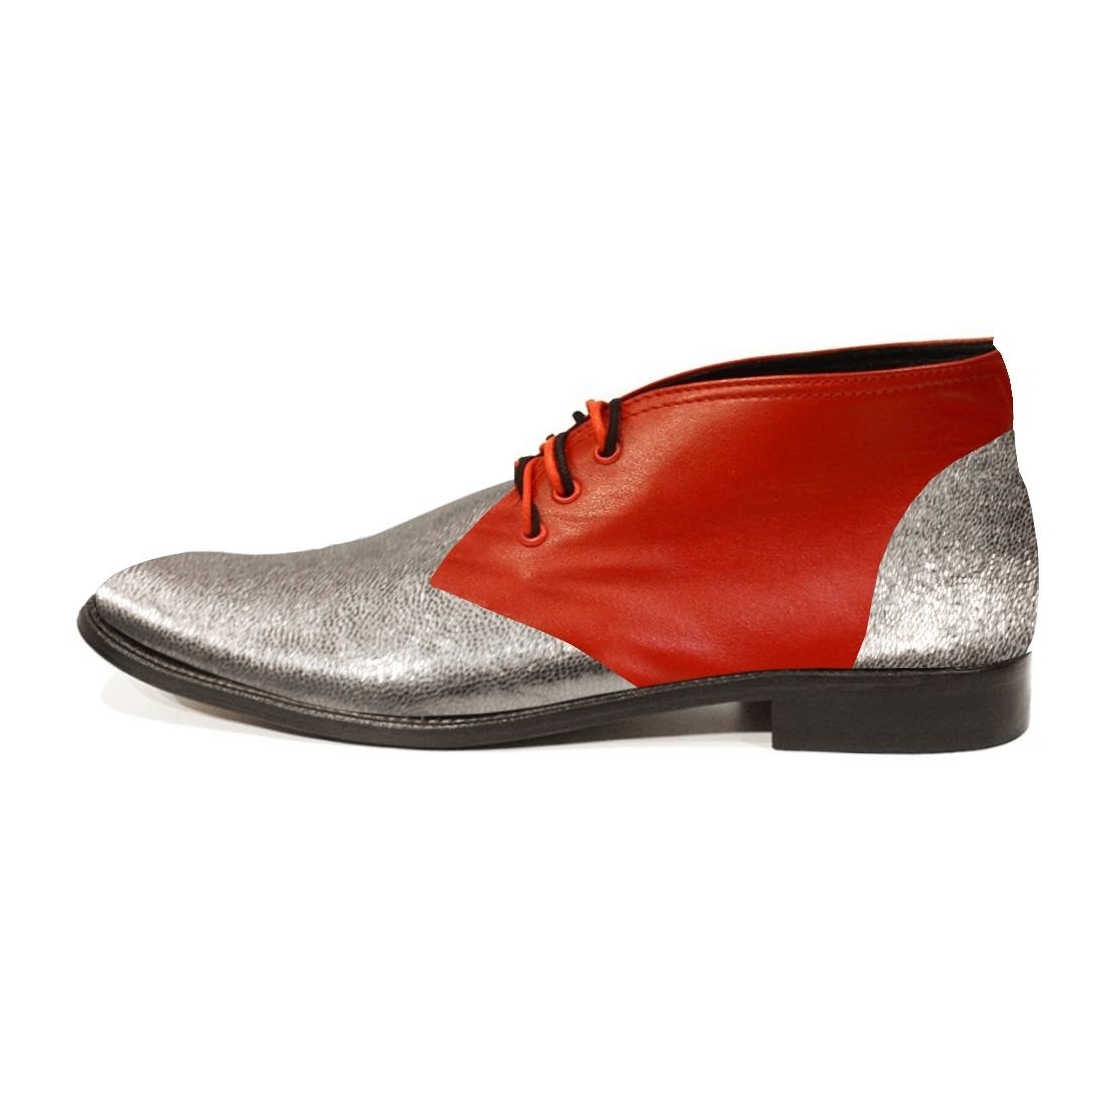 Modello Dello - Chukka Boots - Handmade Colorful Italian Leather Shoes